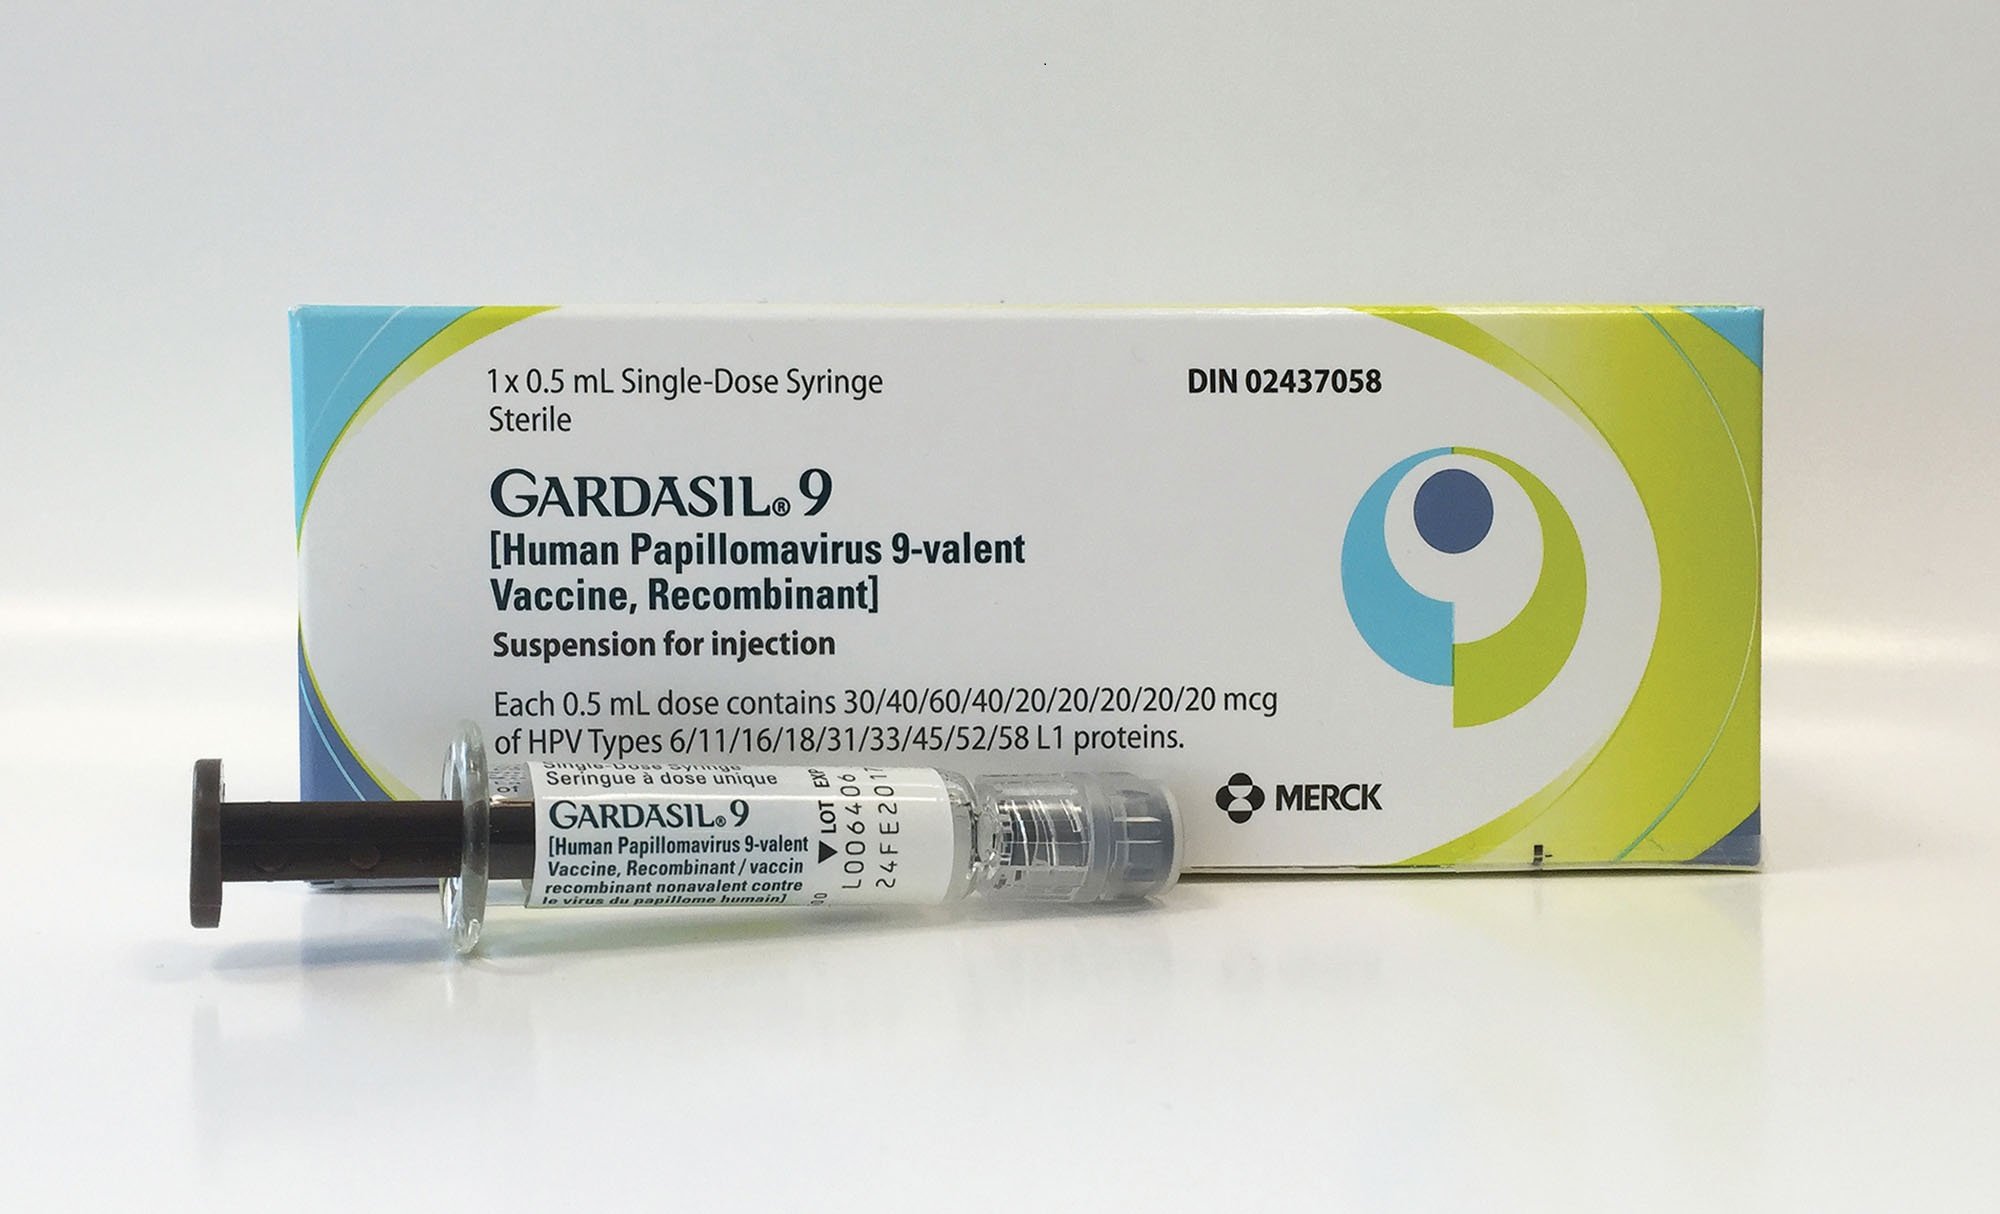 Beschrijving Bewustzijn geschiedenis Merck's Gardasil 9 offers at least 6 years of cancer protection, data show  | Fierce Pharma